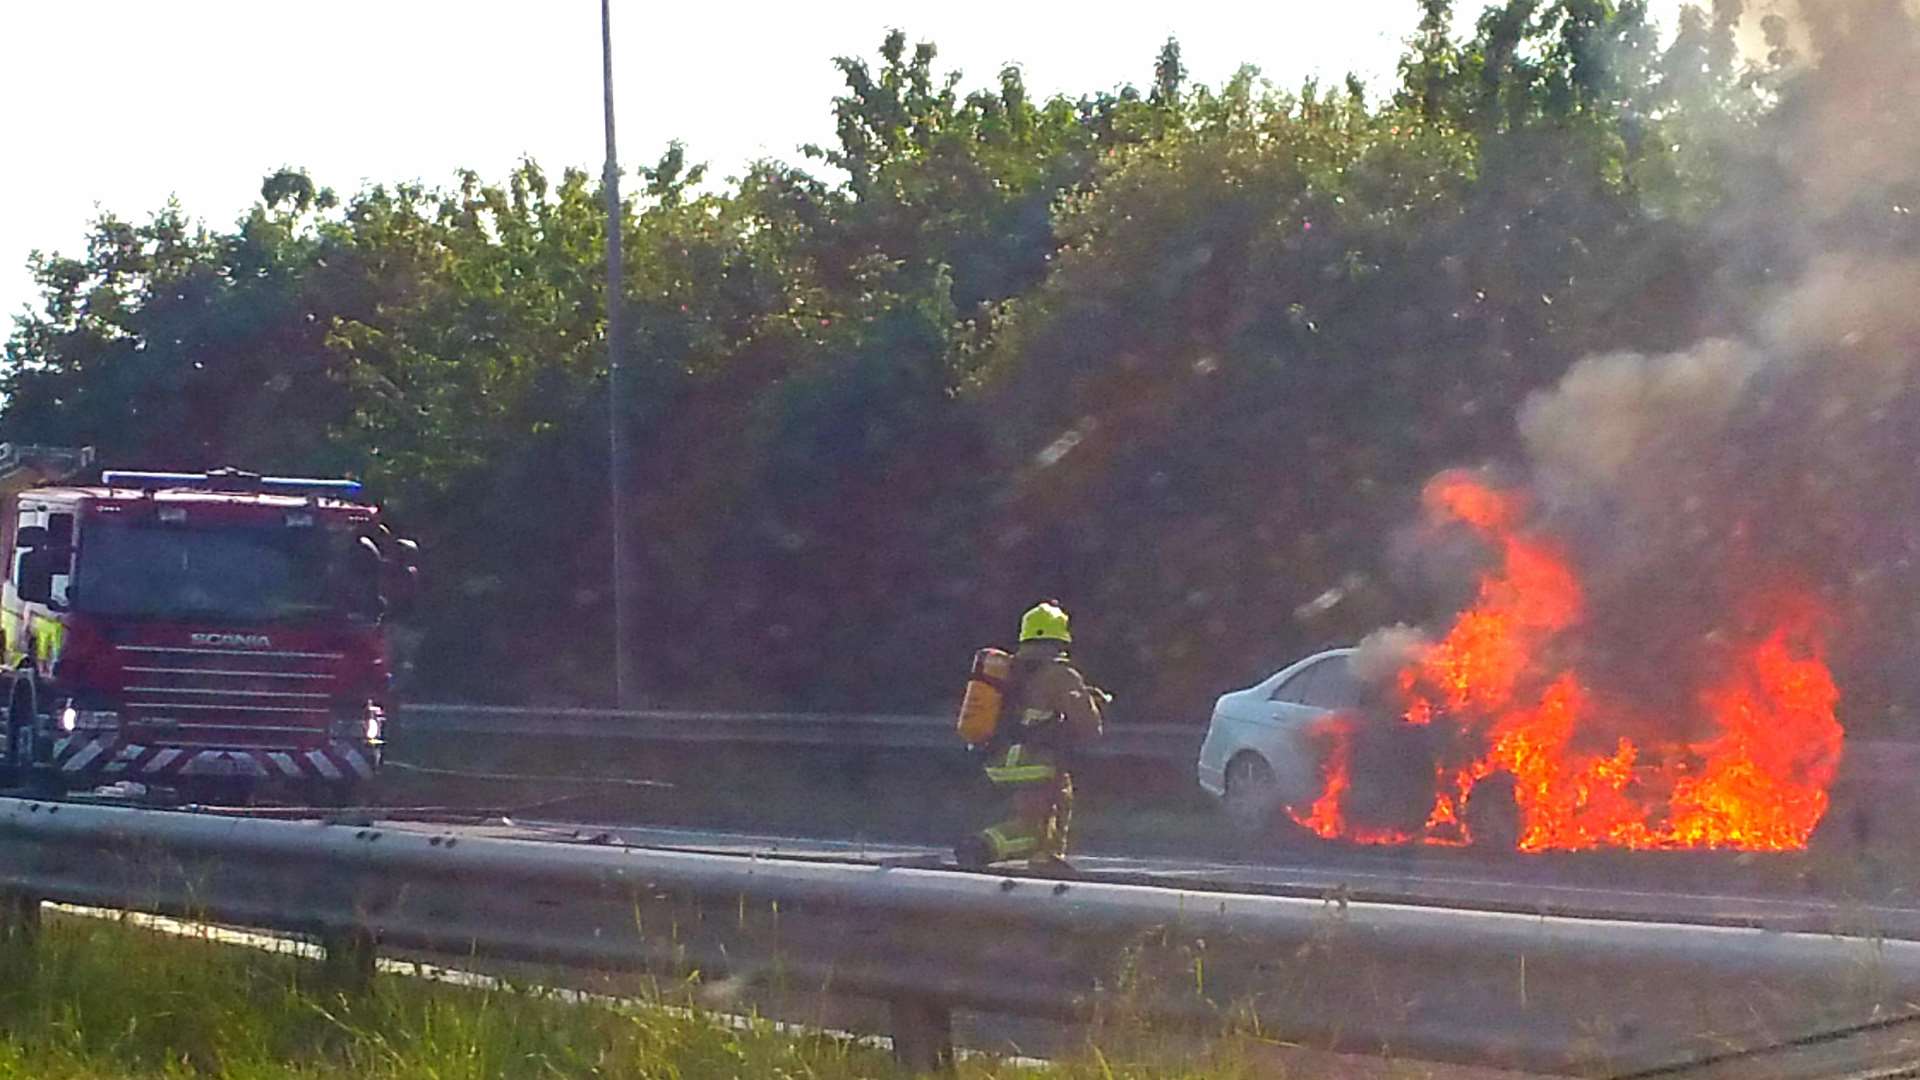 The car burst into flames